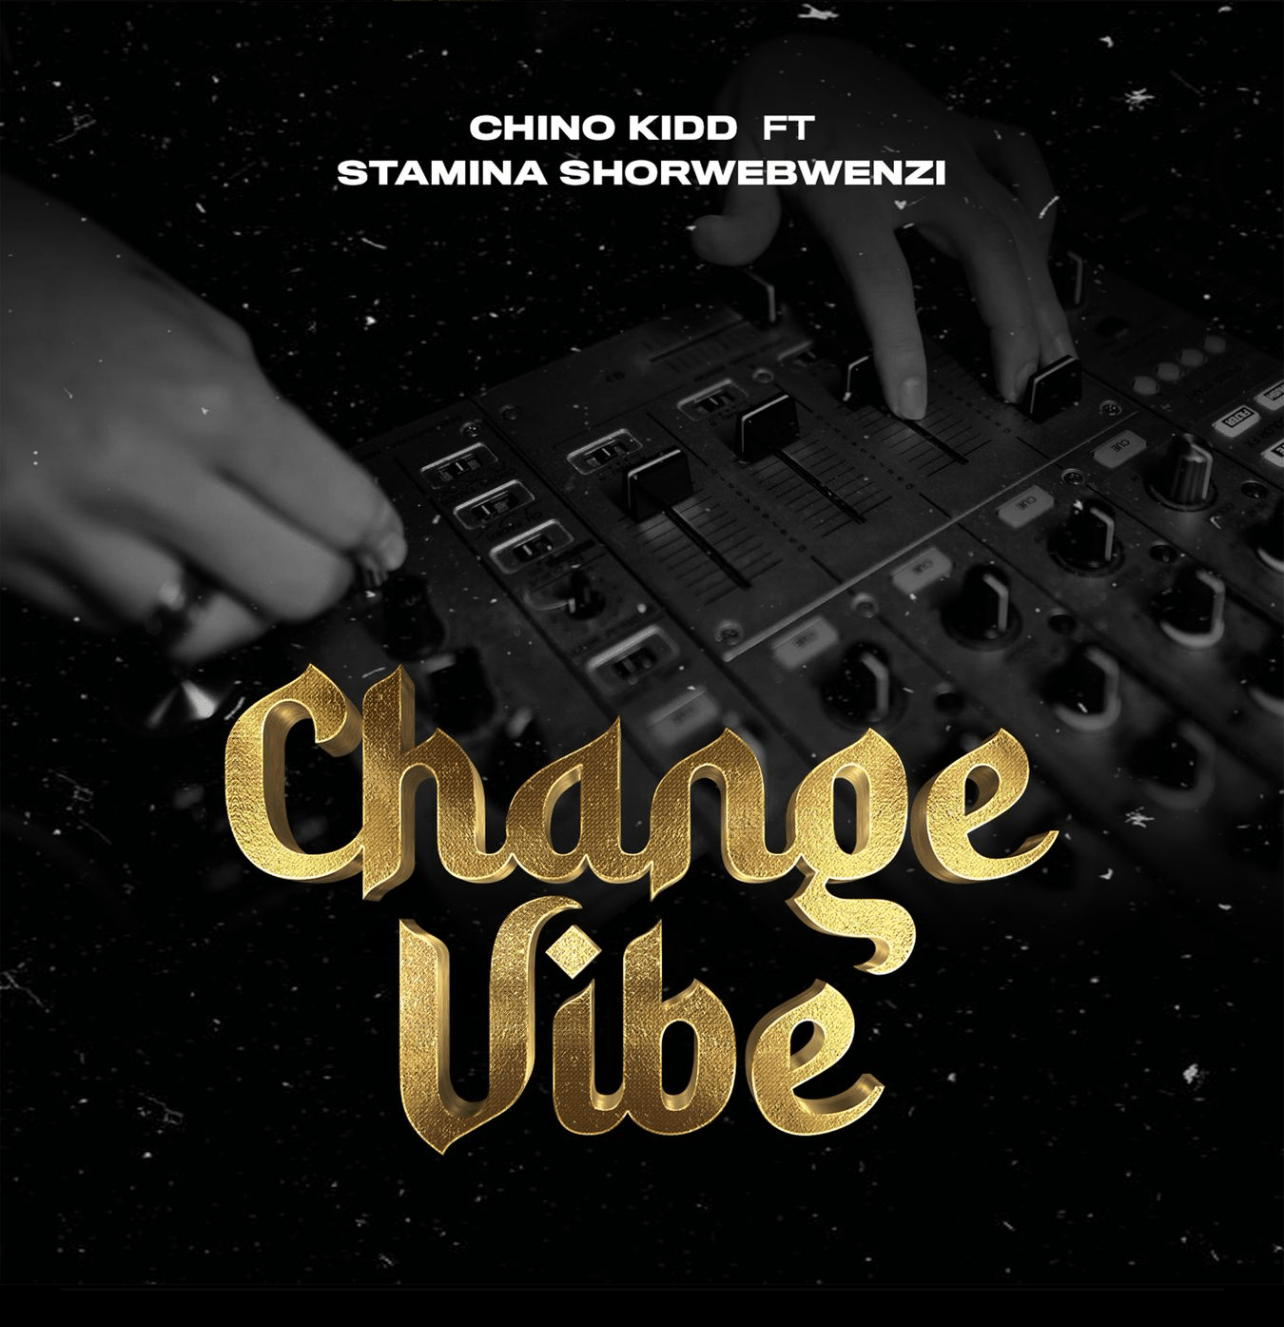 Audio: Chino Kidd Ft. Stamina - Change Vibe (Mp3 Download)